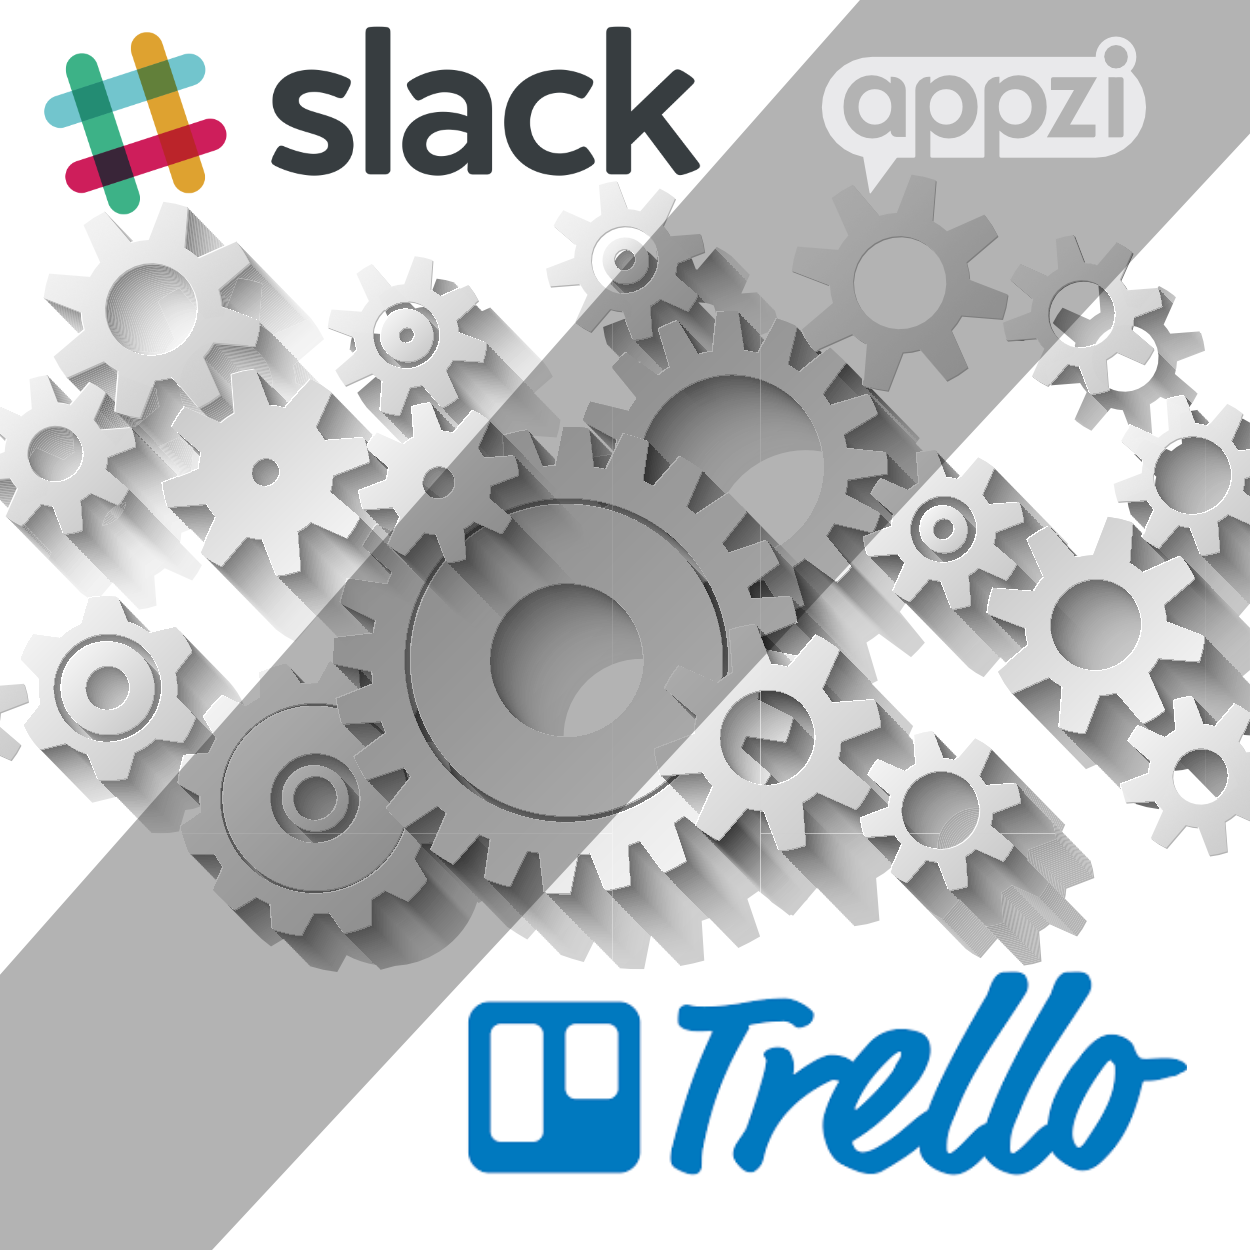 trello integrations with slack